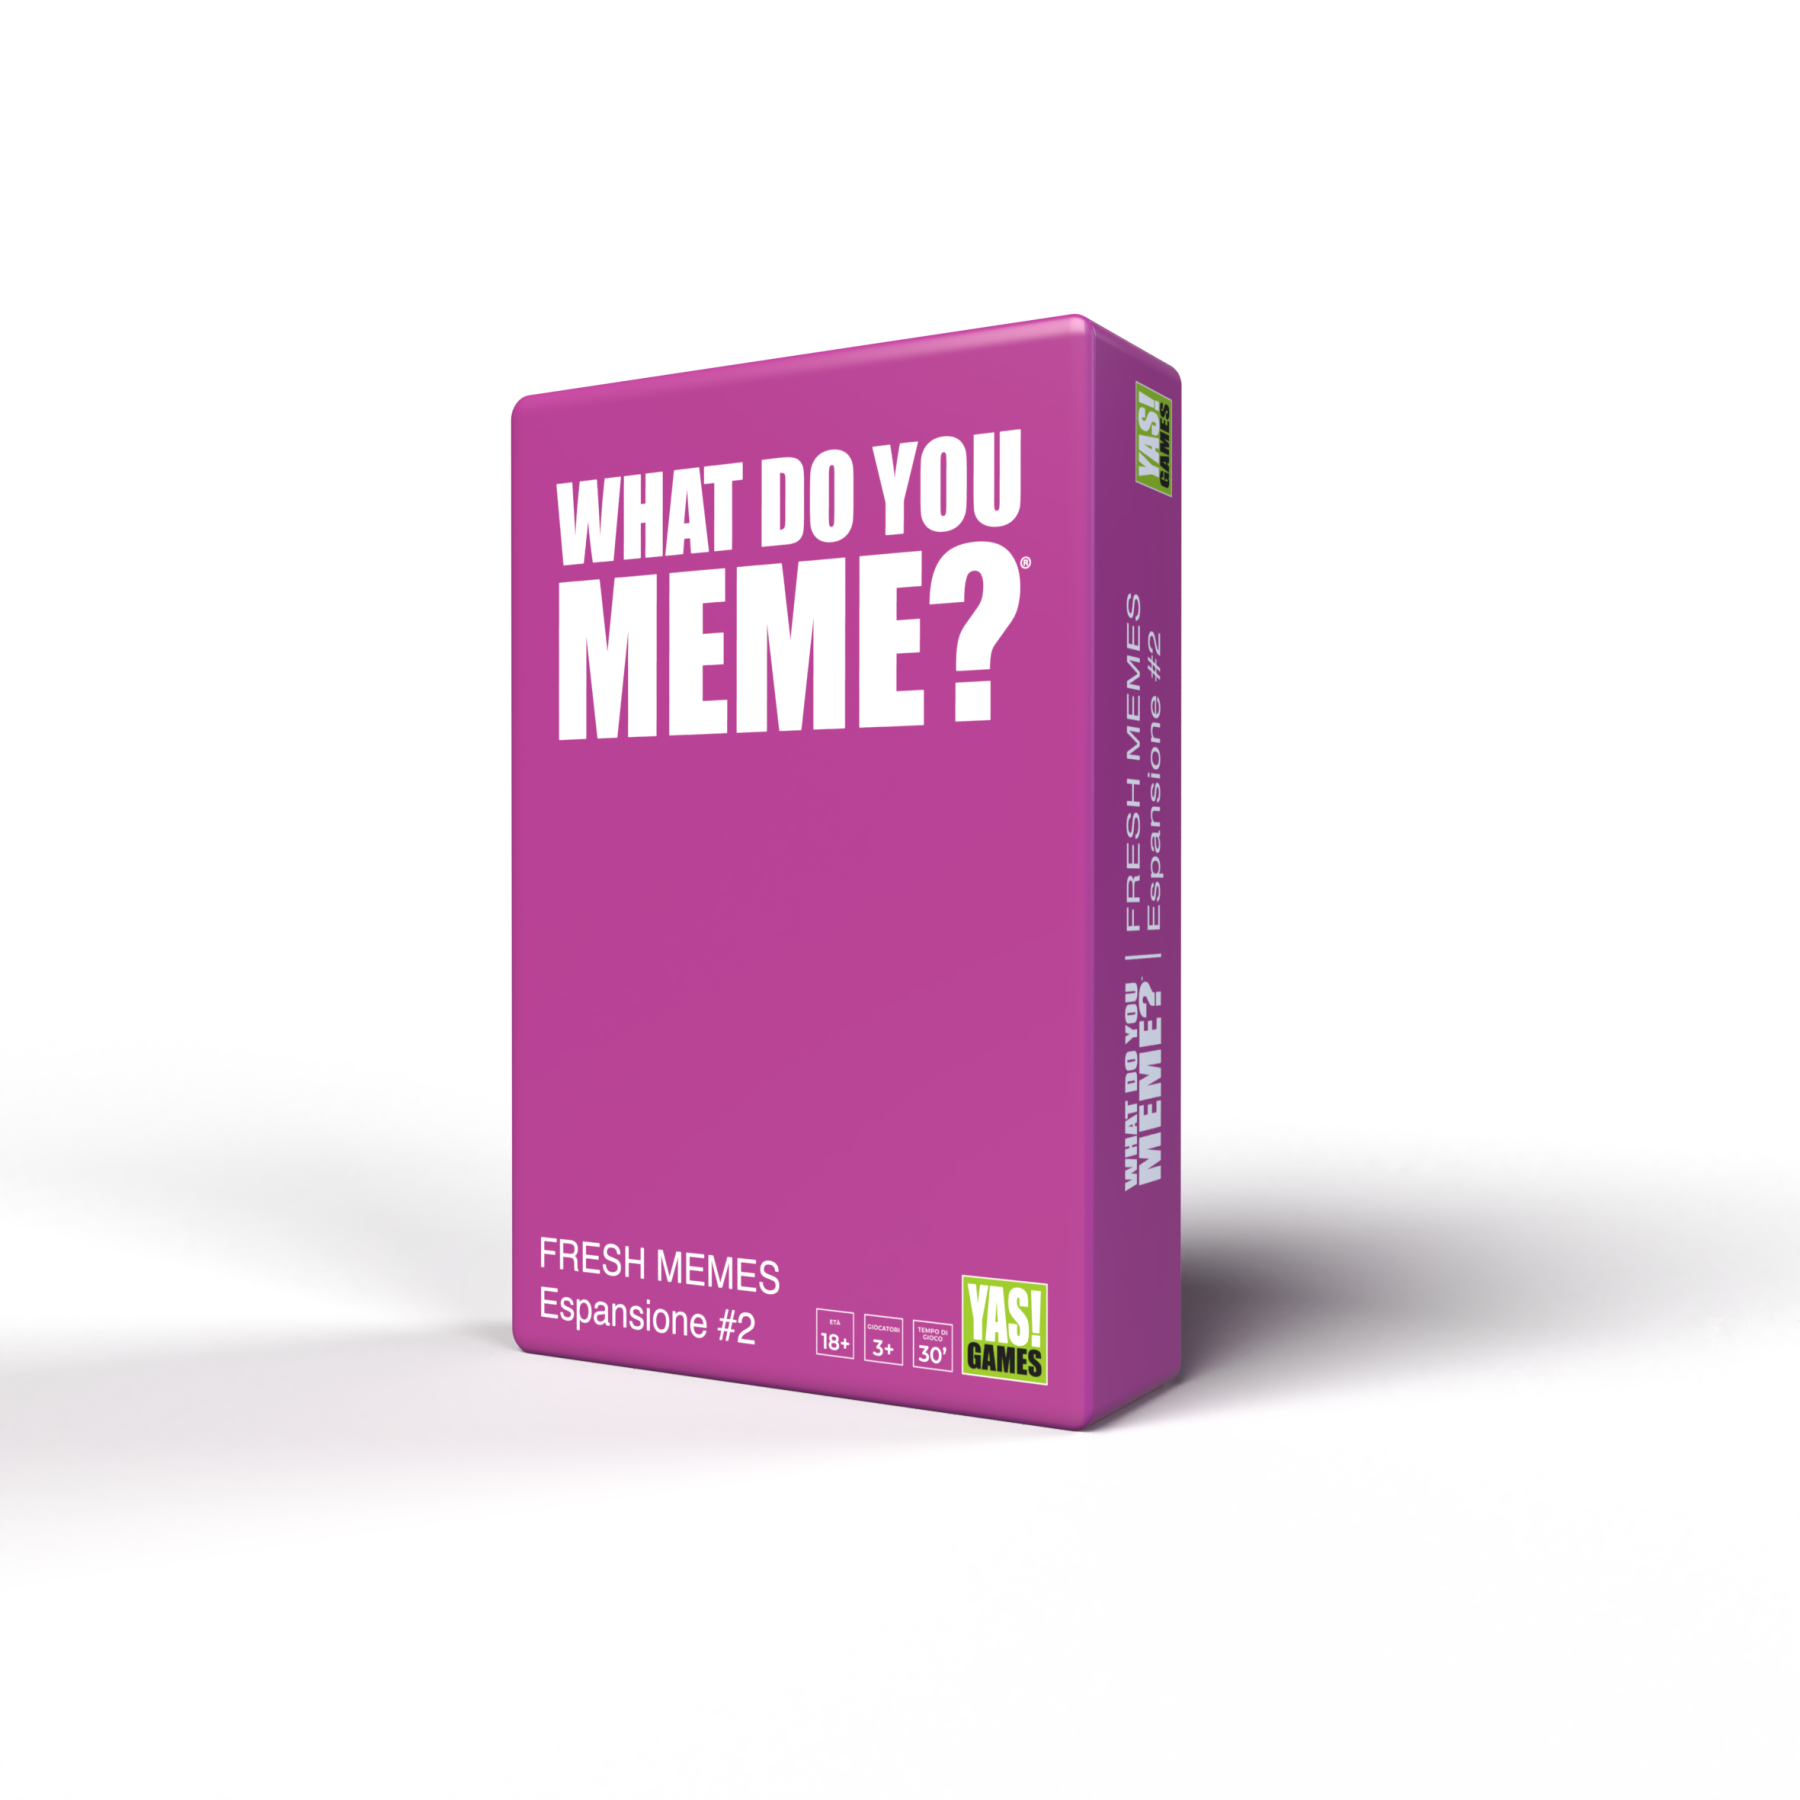 What do You Meme? - Espansione Fresh Memes #2 - Prezzo - Offerta Online